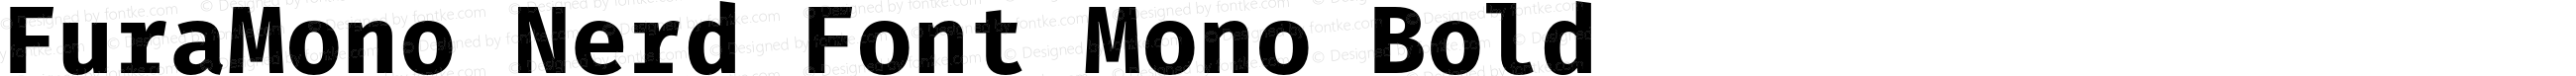 Fura Mono Bold Nerd Font Complete Mono